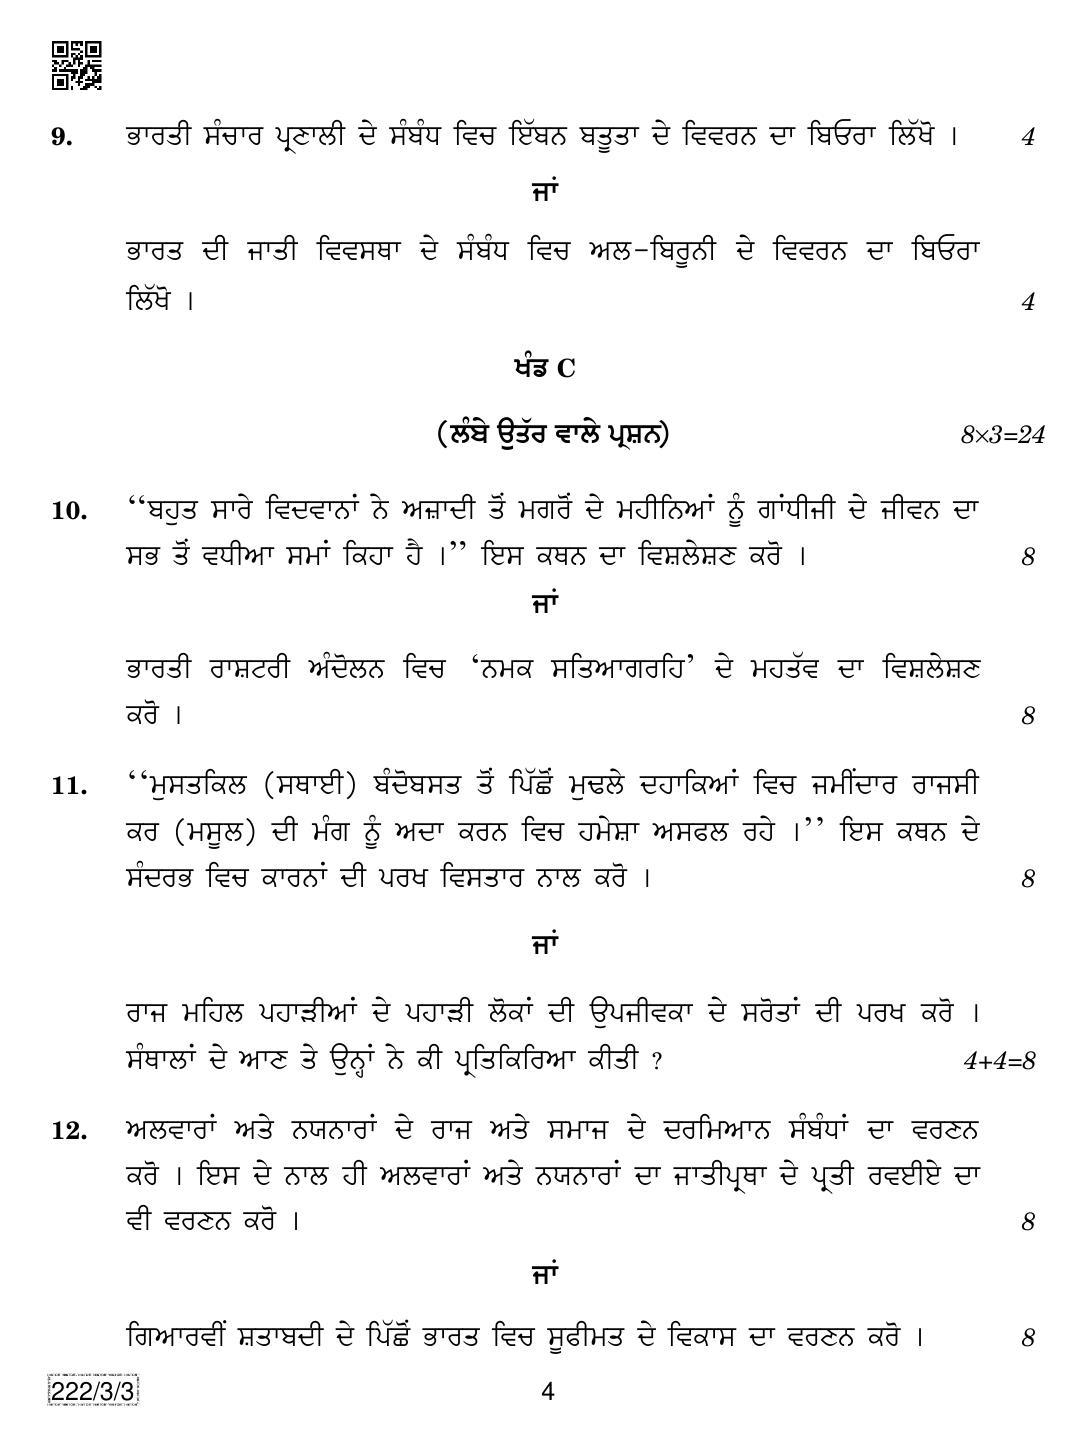 CBSE Class 12 222-3-3 Hiastory (Punjabi) 2019 Question Paper - Page 4